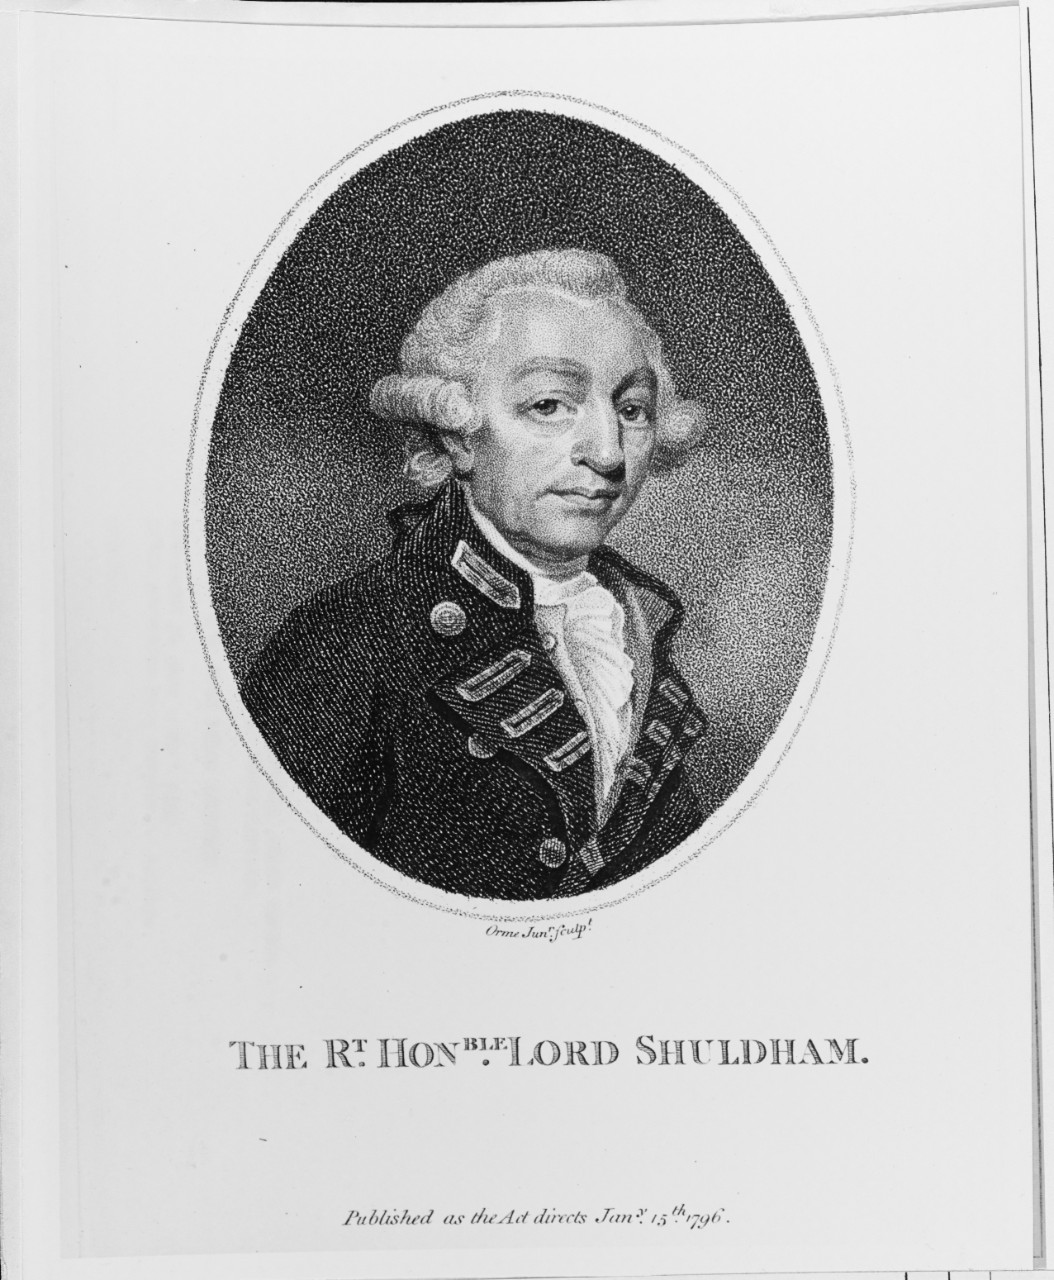 Molyneaux Shuldham, Lord Shuldham (1717?-1798), British Admiral